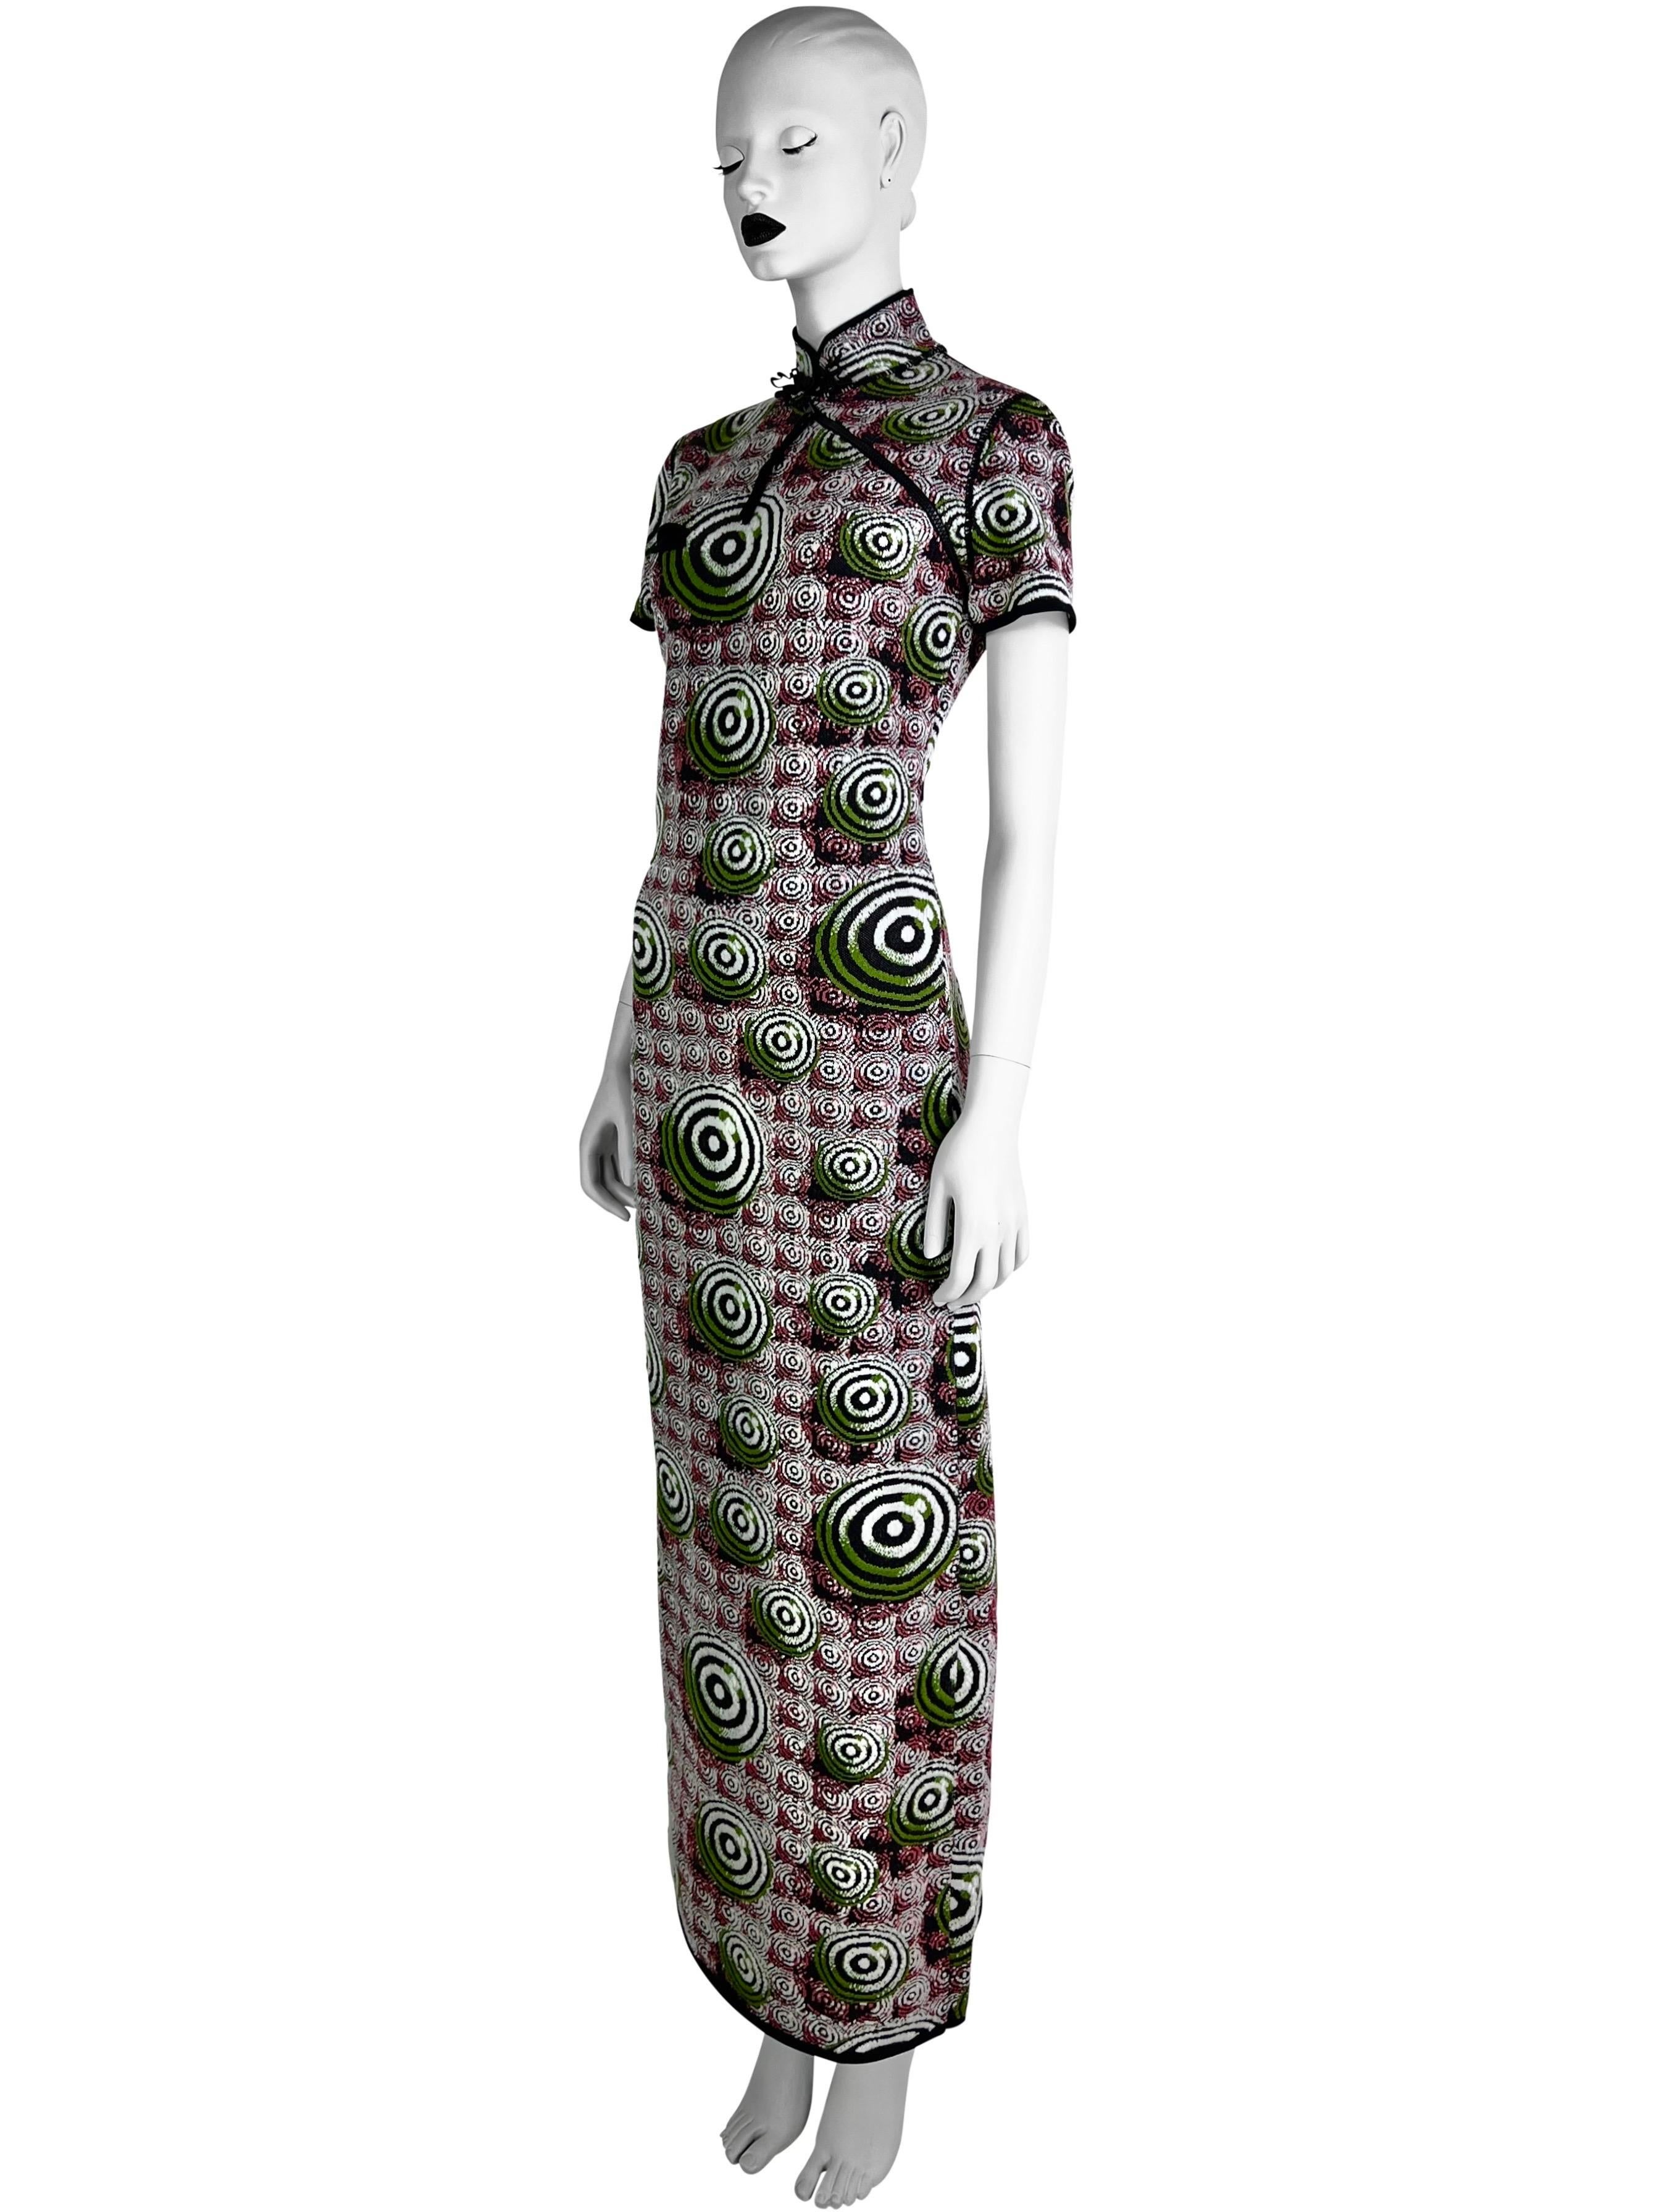 Jean-Paul Gaultier Fall 1996 Psychedelic Print Jacquard Cheongsam Dress For Sale 2